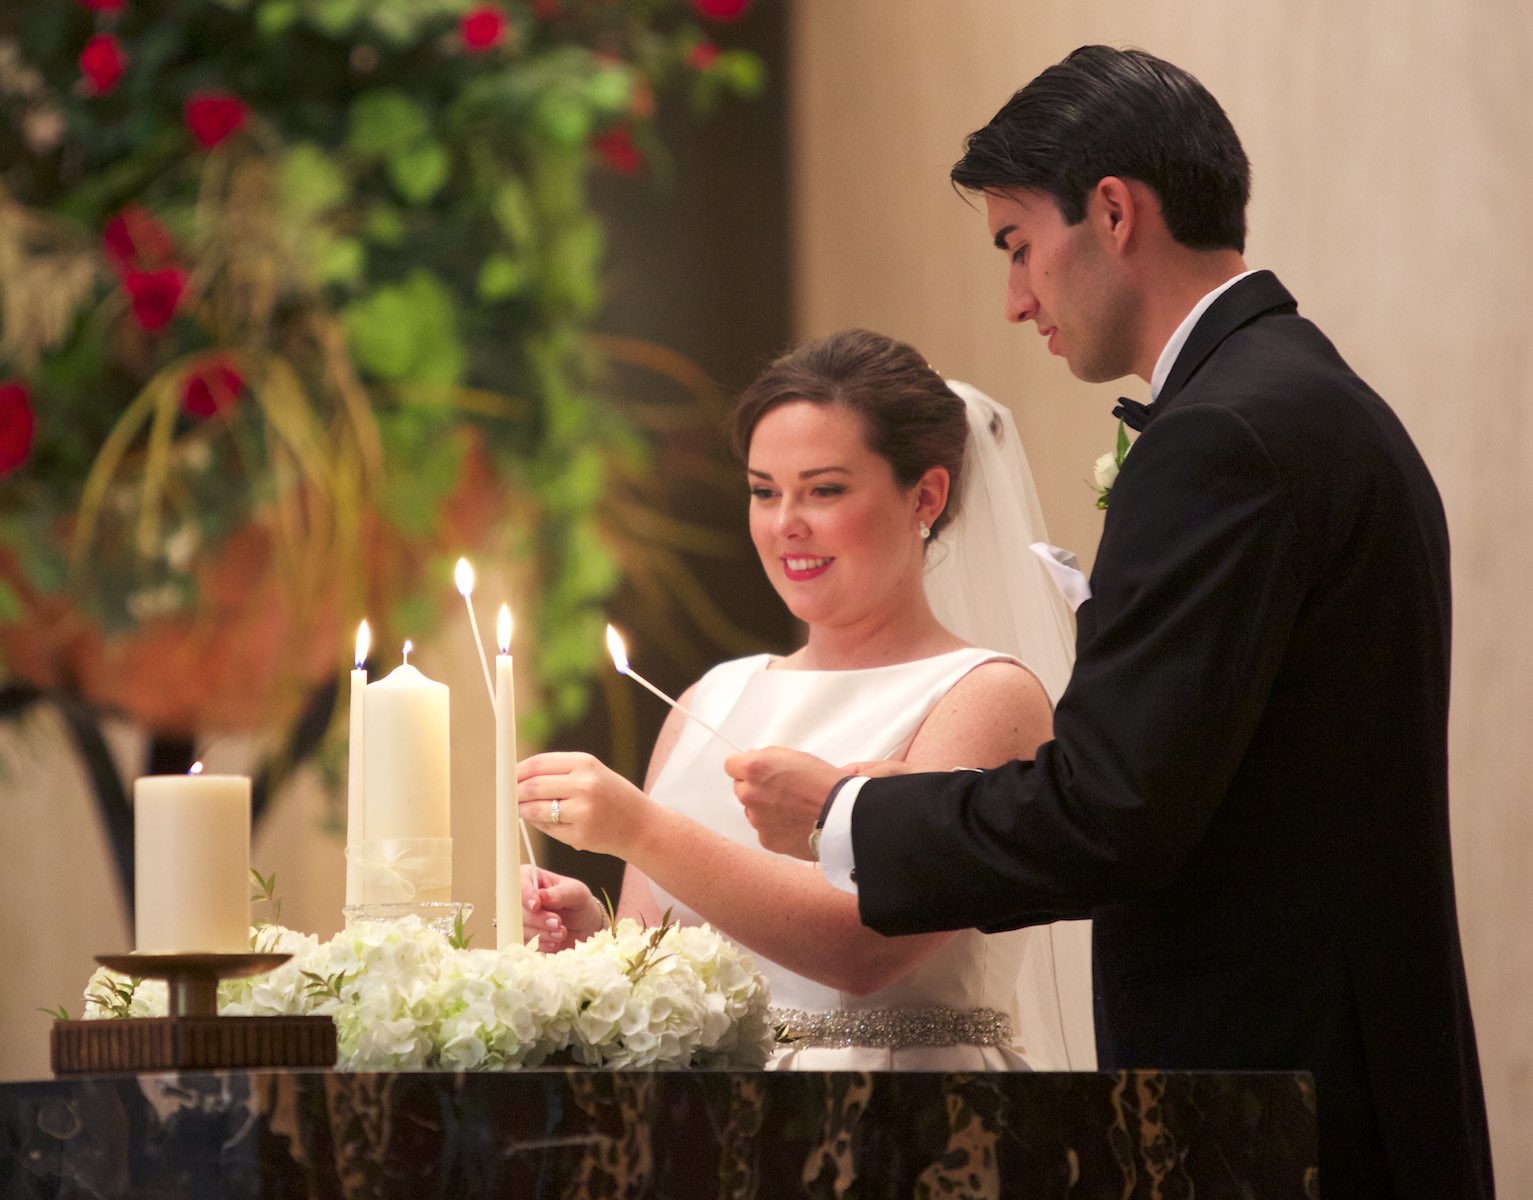 Lighting the unity candle, Elizabeth & Daniel's wedding ceremony at St. Rita of Cascia Shrine Chapel in Chicago. Wedding photography by Steve & Tiffany Warmowski